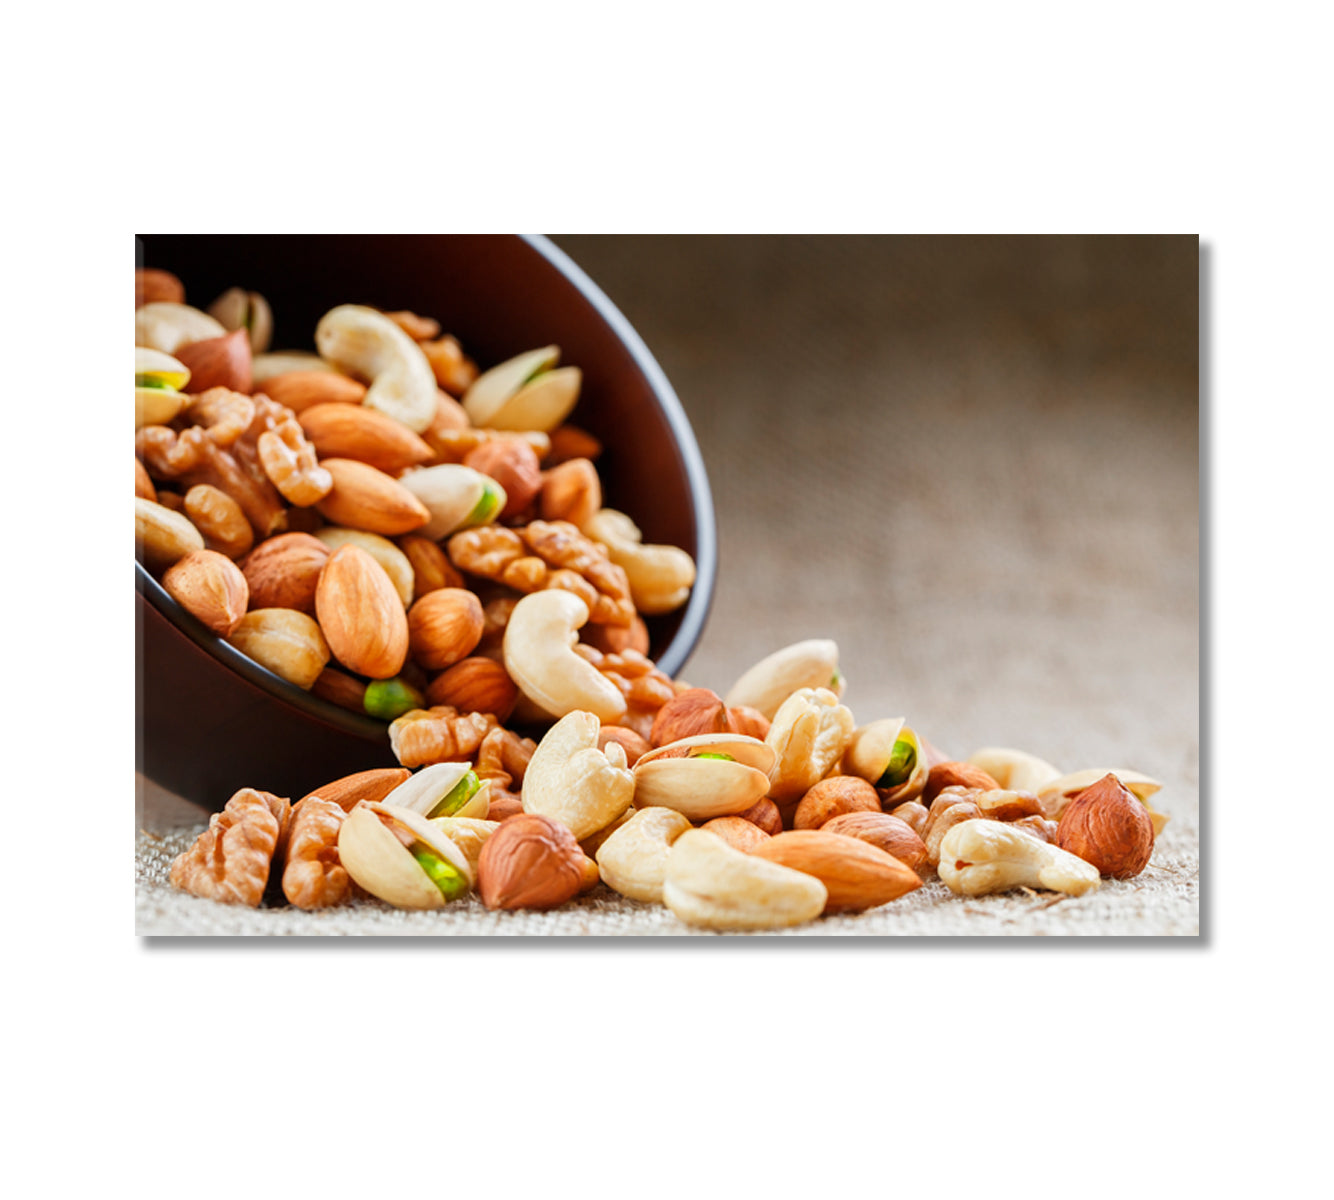 Nuts Cashews Almonds Pistachios Hazelnuts and Walnuts Canvas Print-Canvas Print-CetArt-1 Panel-24x16 inches-CetArt